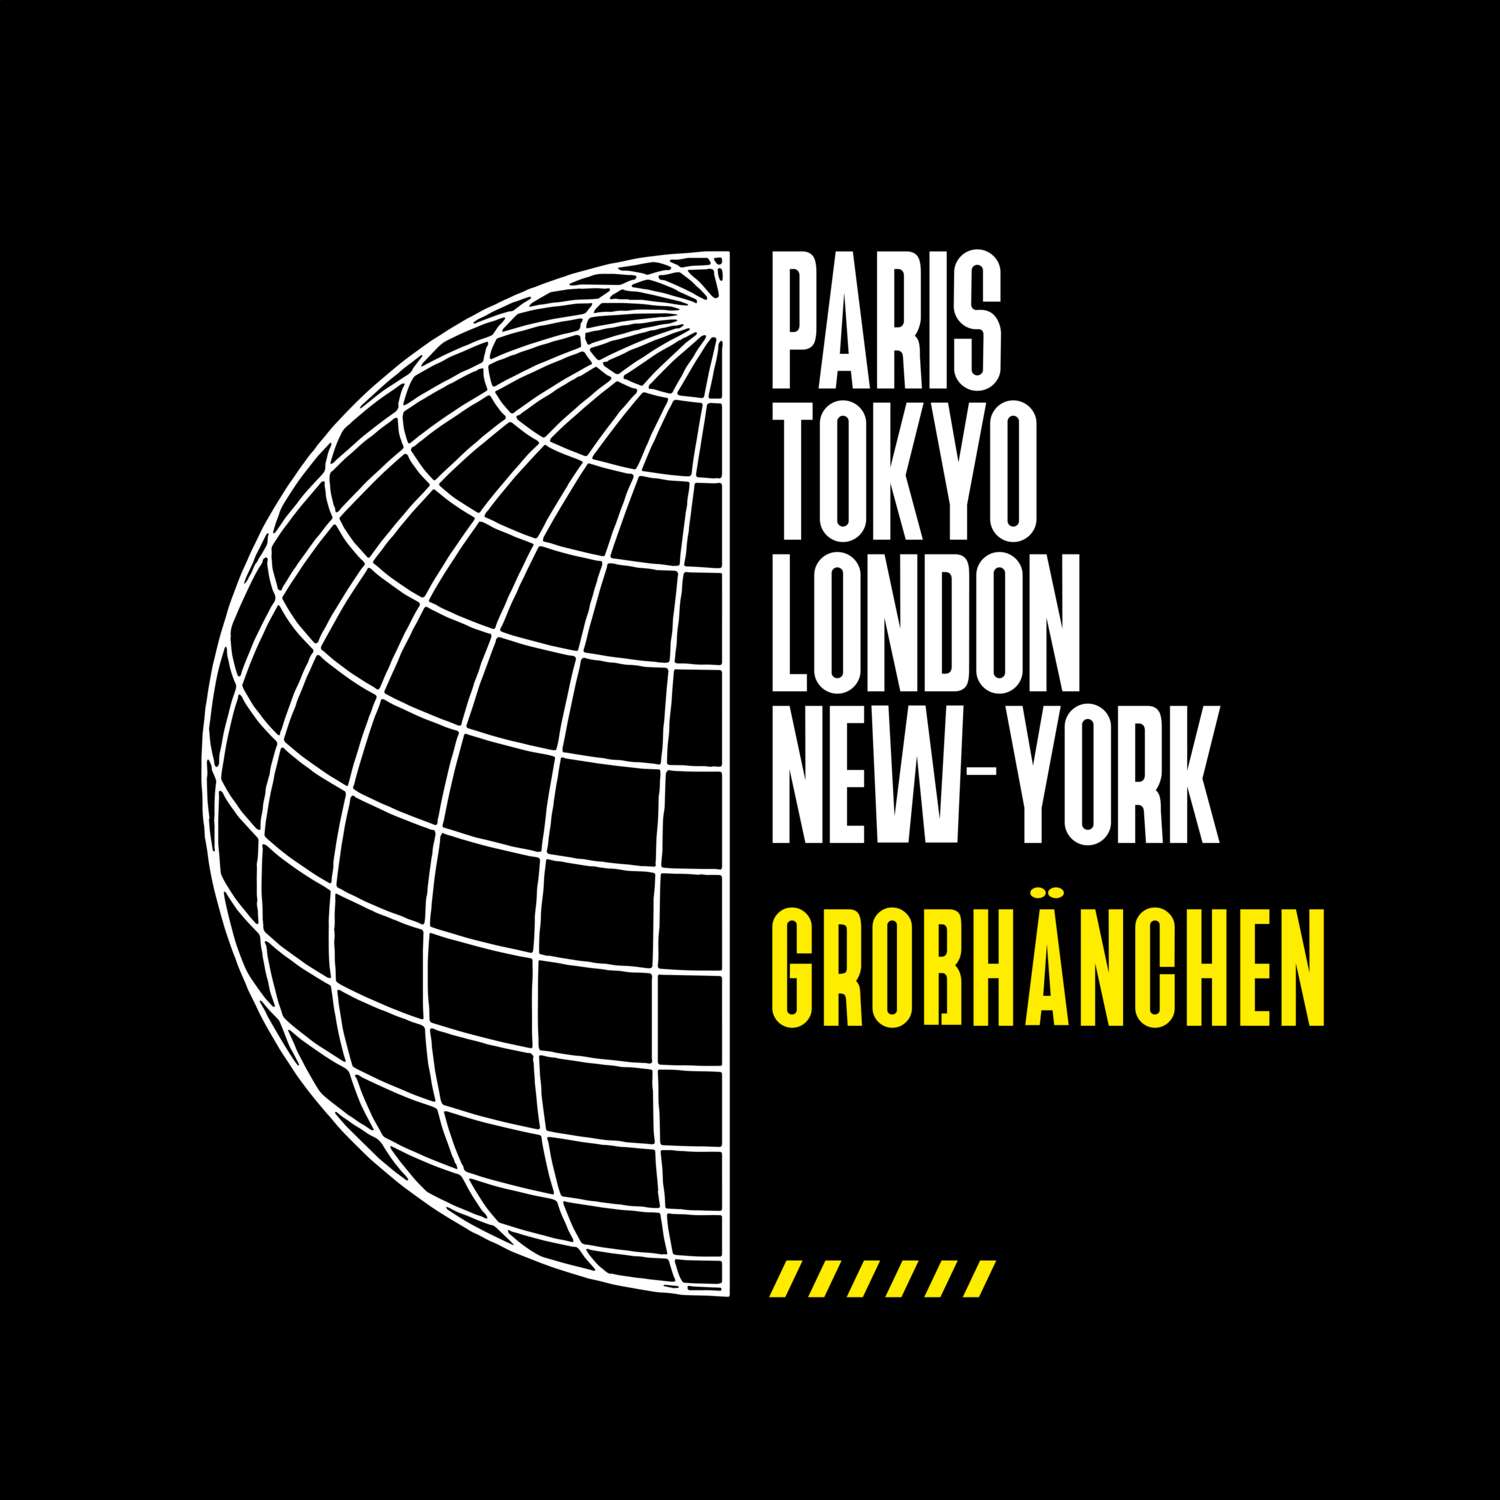 Großhänchen T-Shirt »Paris Tokyo London«